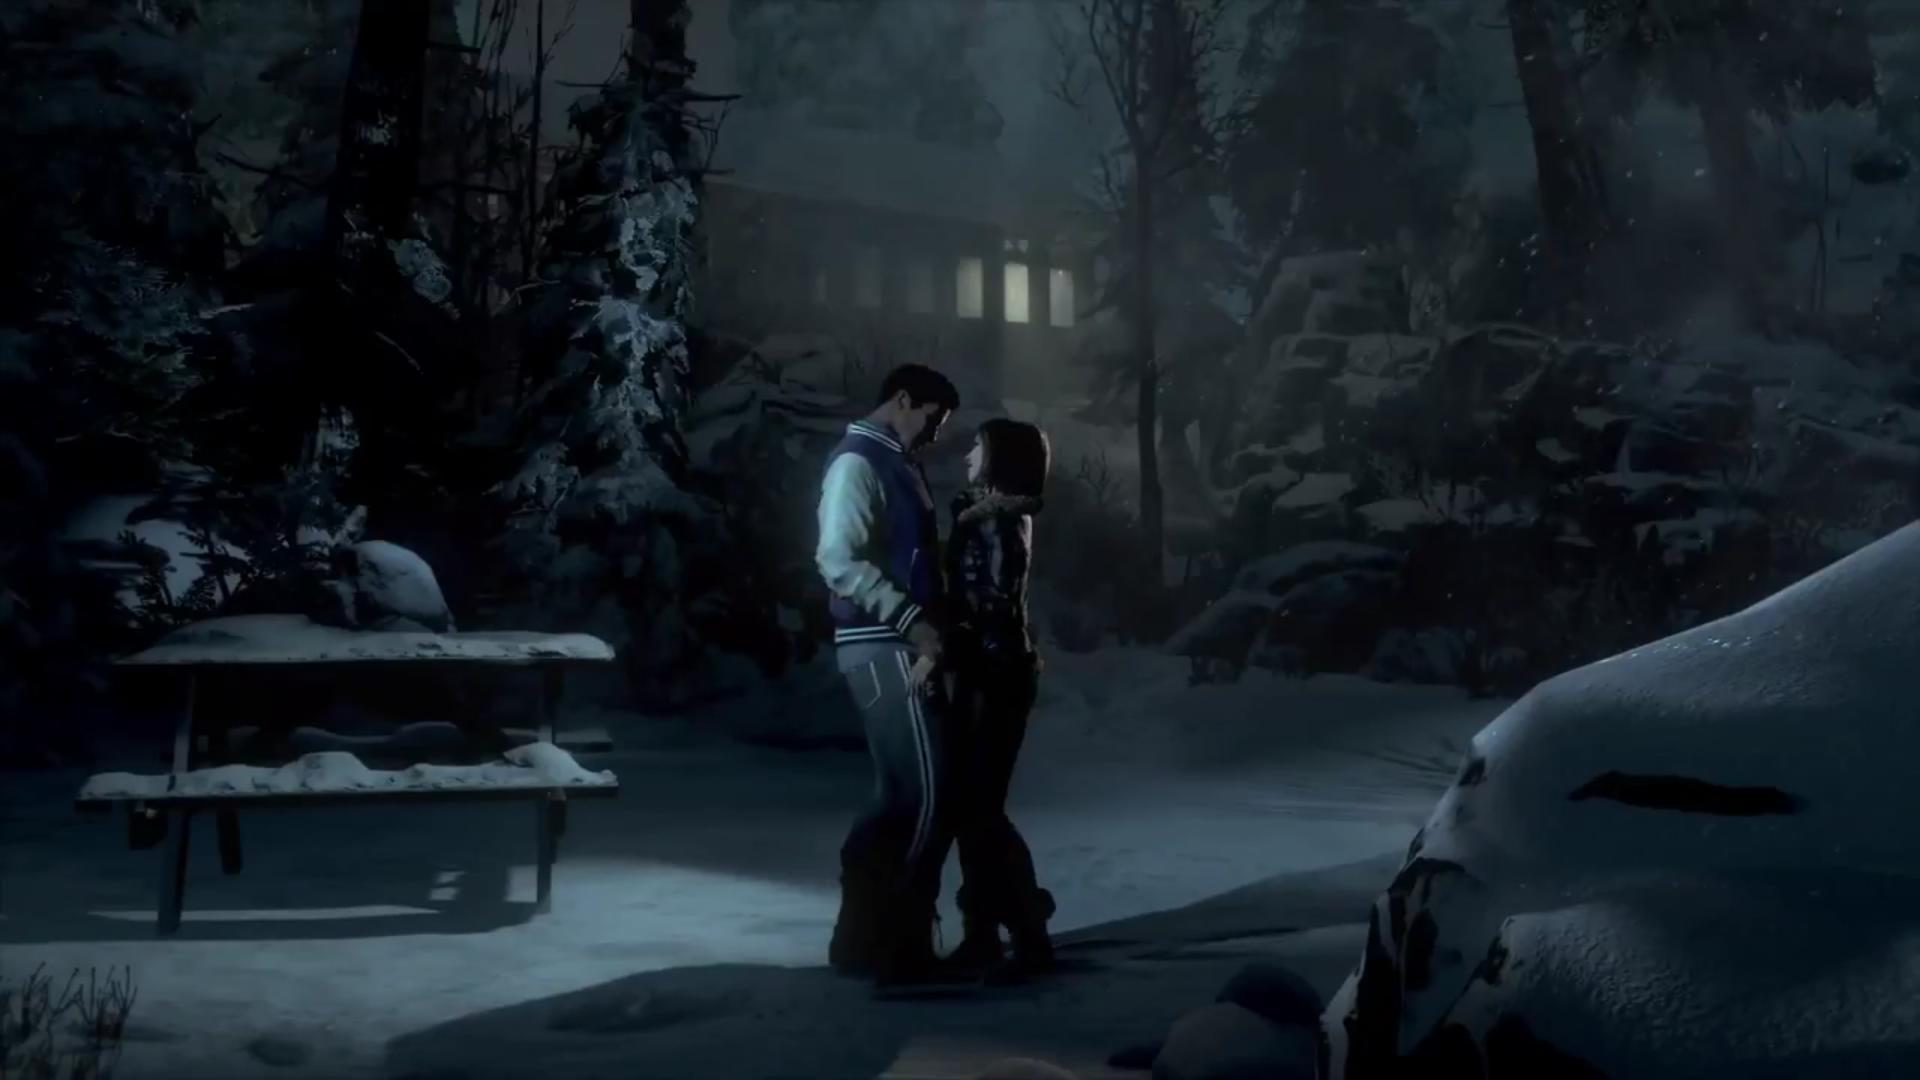 Horror B-Movie Simulator, Until Dawn, Gets a Valentine’s Day-Themed Trailer